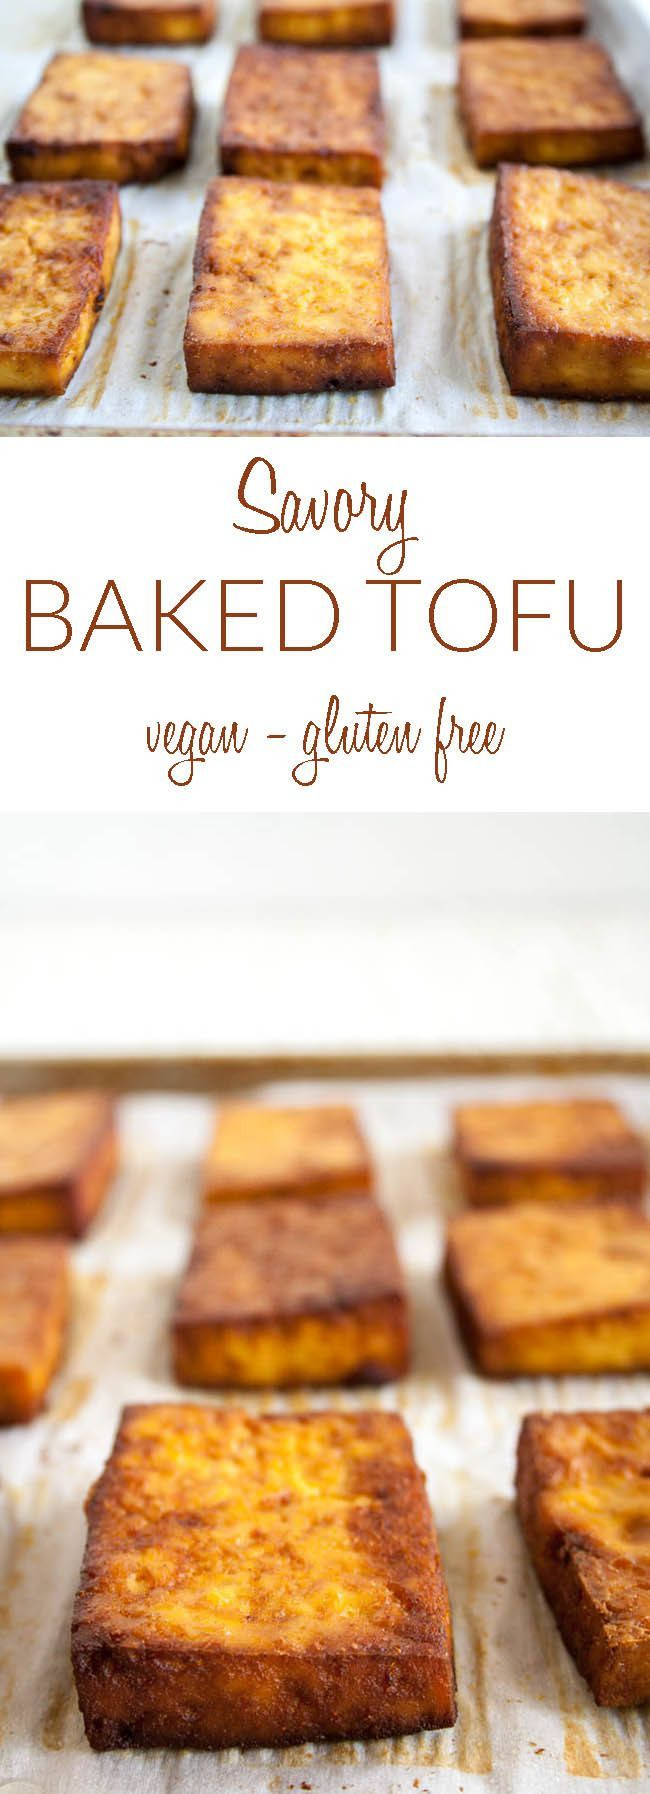 Baked Tofu Recipes Vegan
 Savory Baked Tofu vegan gluten free This healthy oven